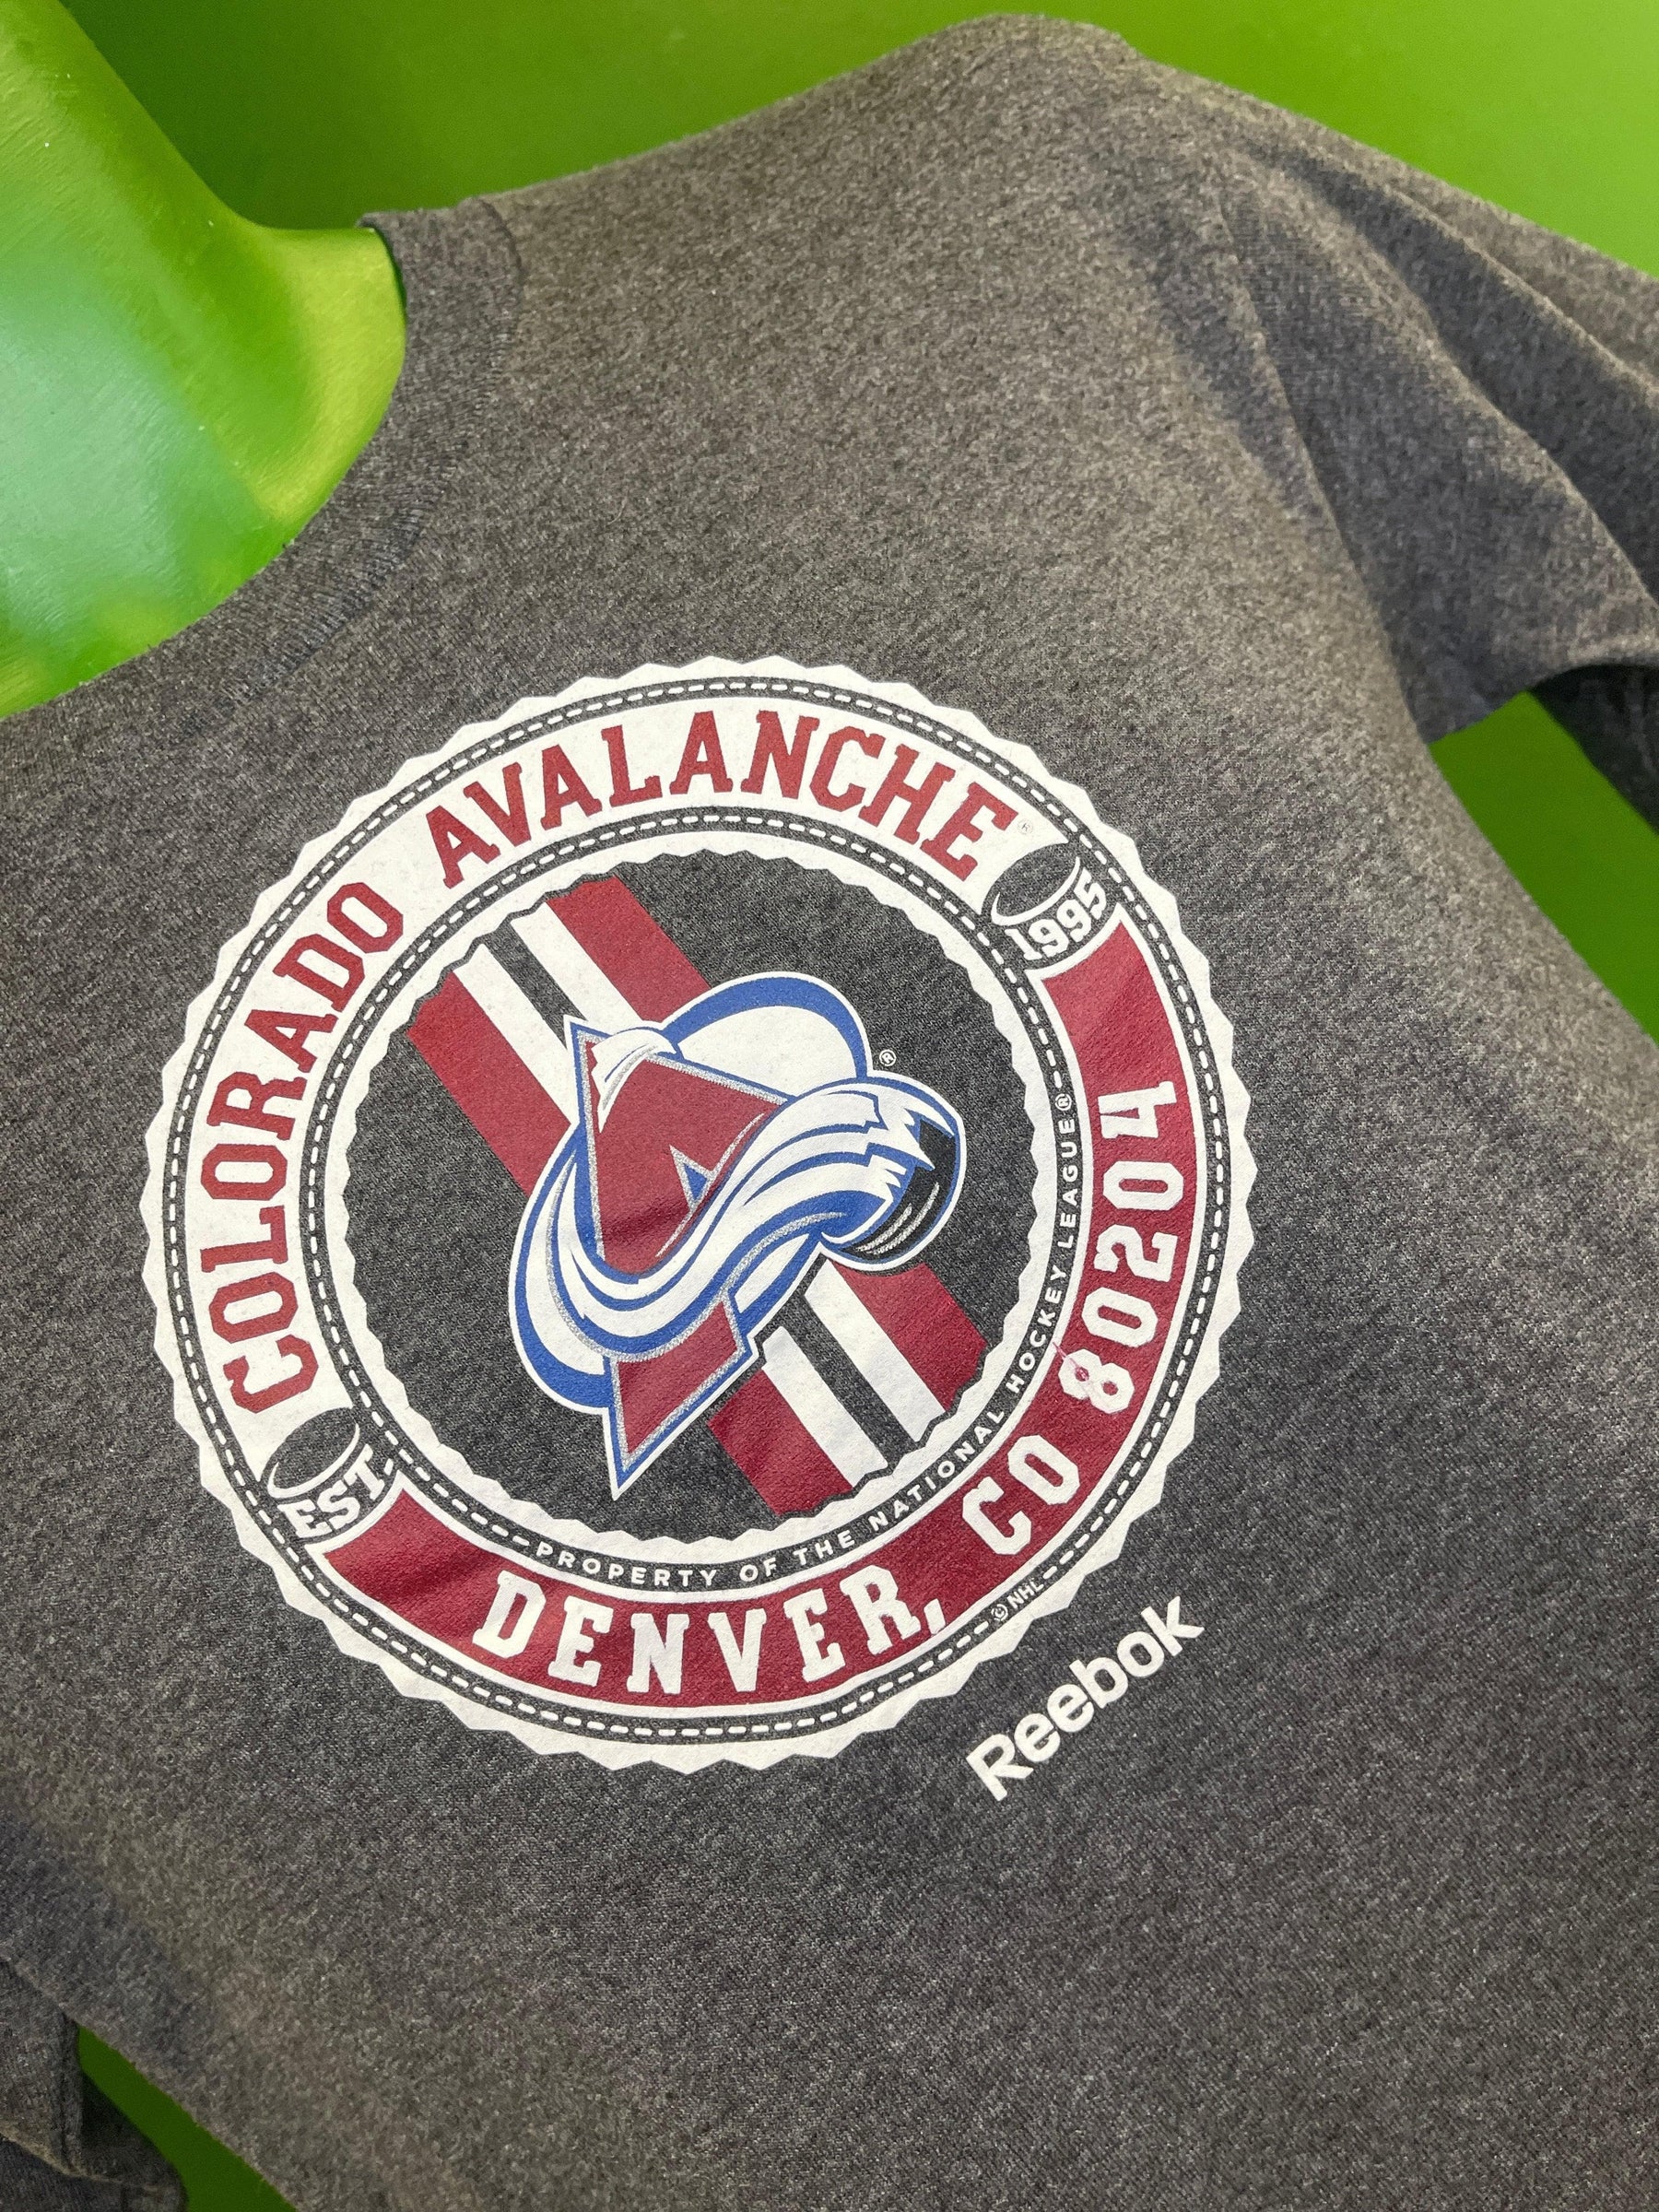 NHL Colorado Avalanche Reebok Grey L/S T-Shirt Youth Medium 10-12